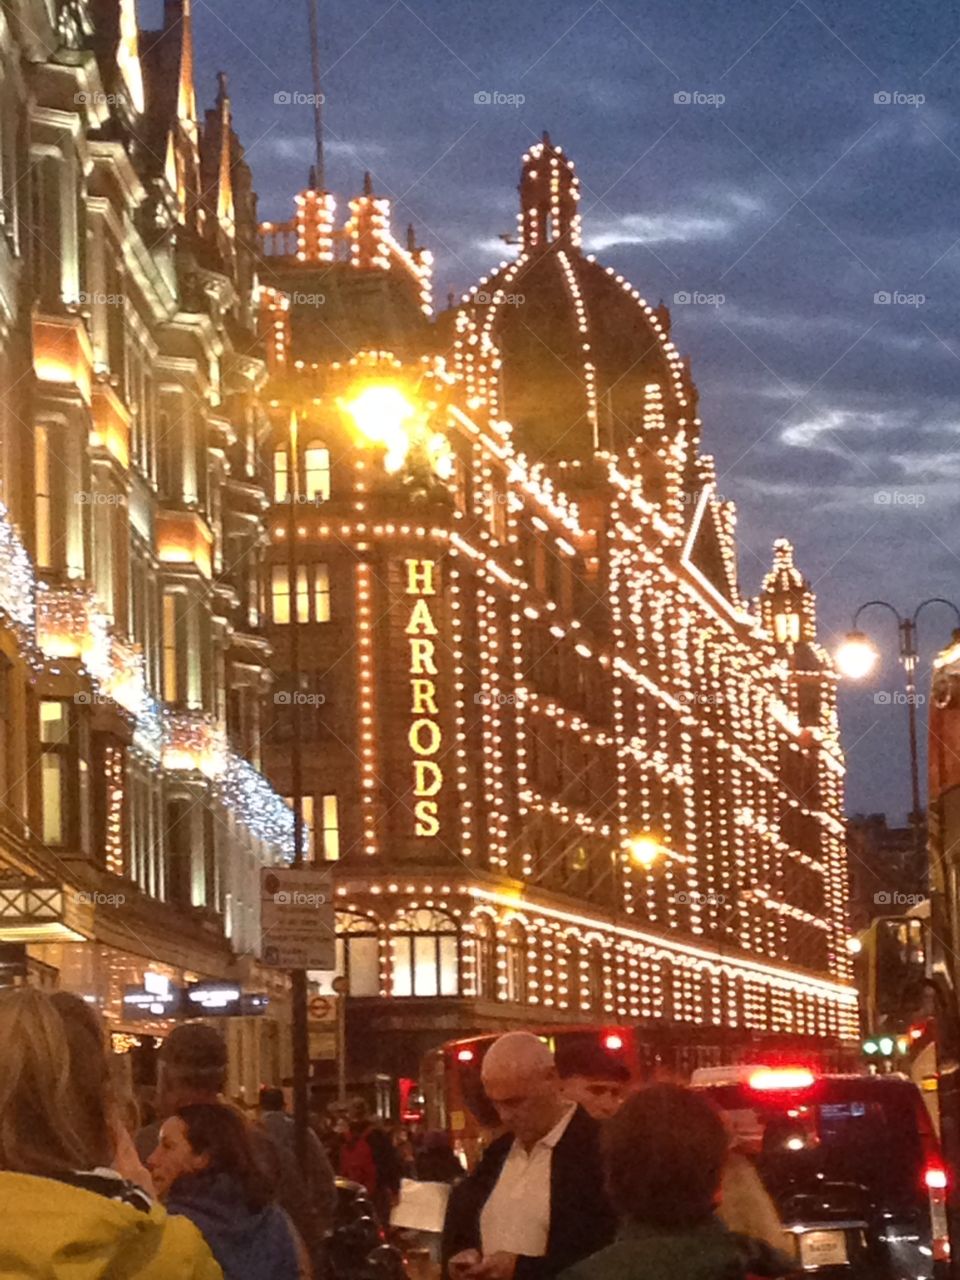 Harrods in lights, London. Harrods one evening looking amazing!